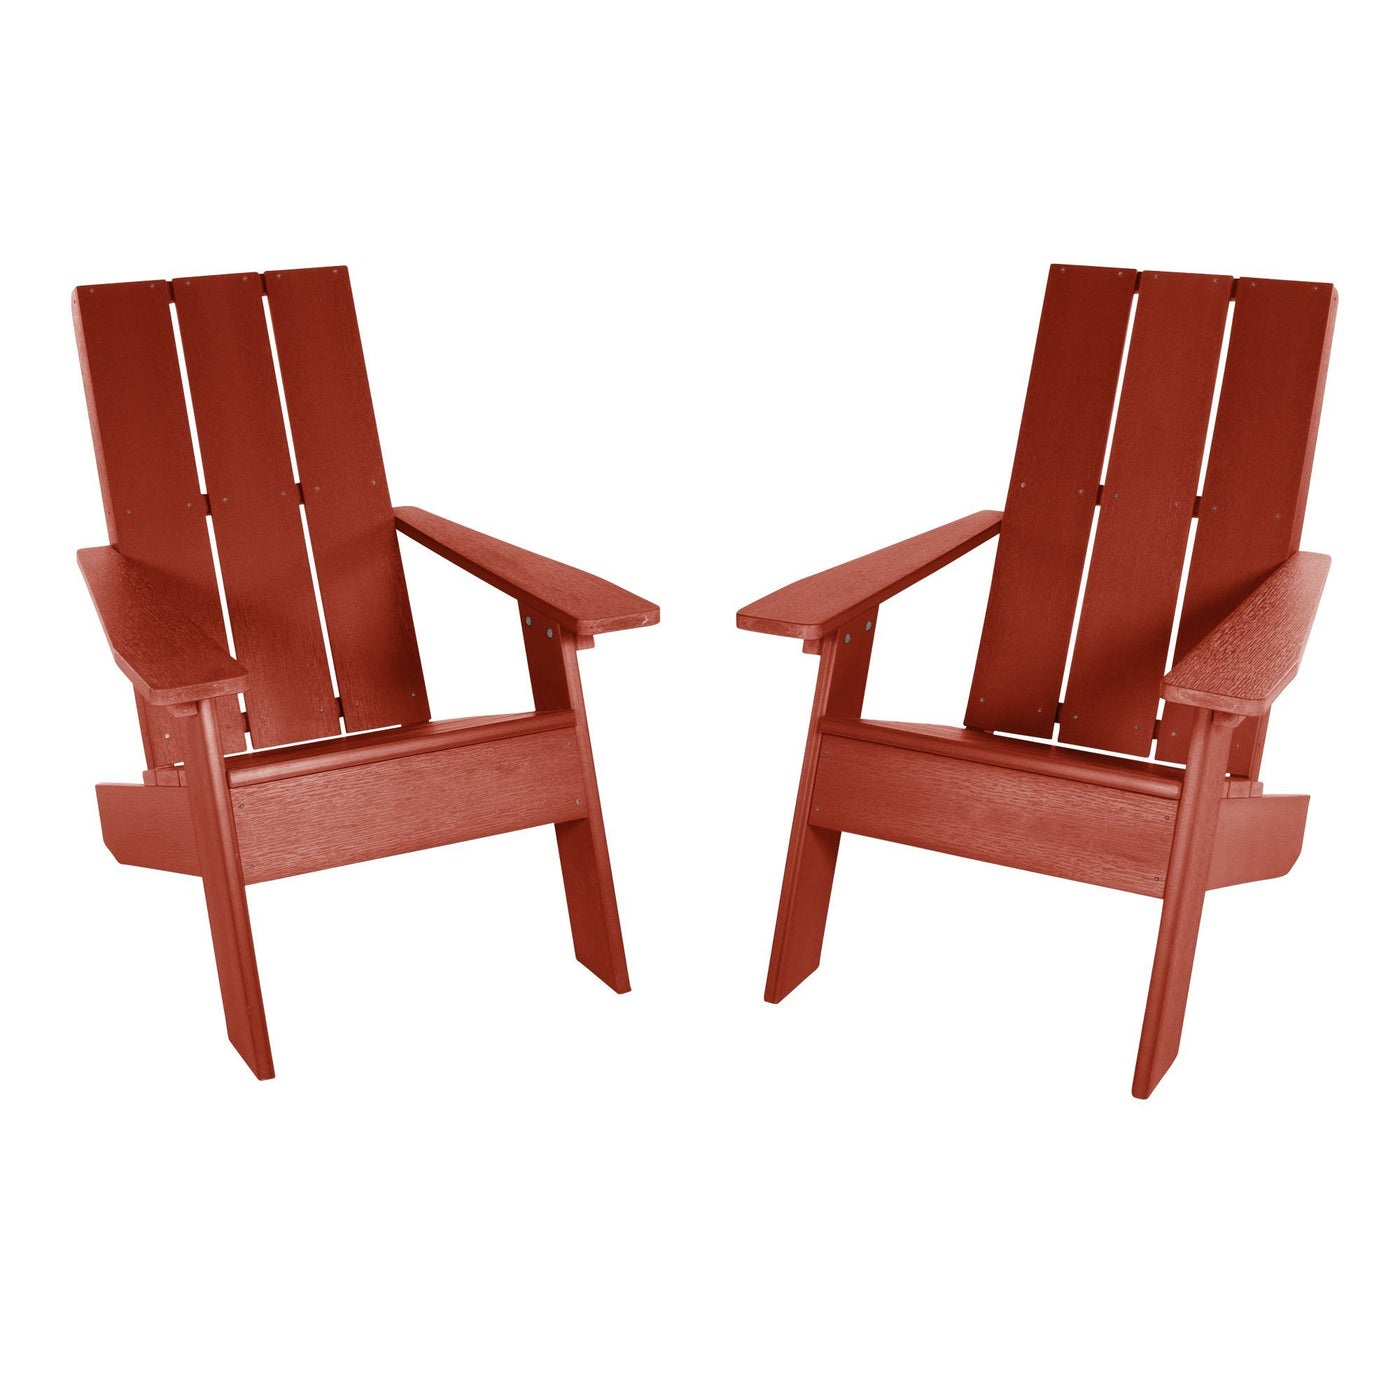 Set of Two Barcelona Modern Adirondack Chairs Highwood USA Rustic Red 